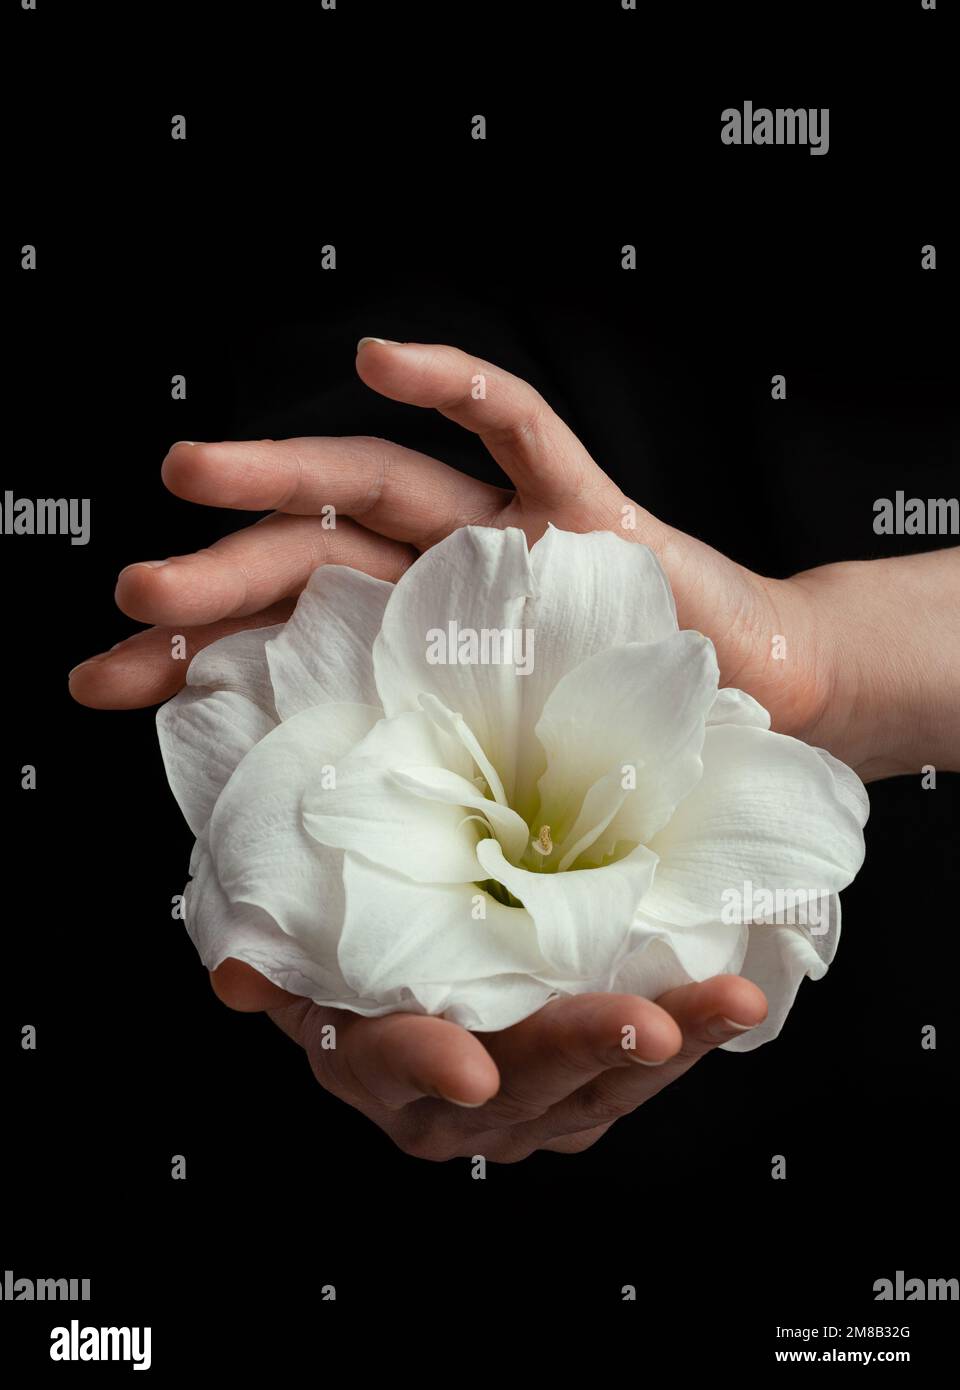 hands holding white fragile flower on black background, care love tenderness sensitivity concept Stock Photo